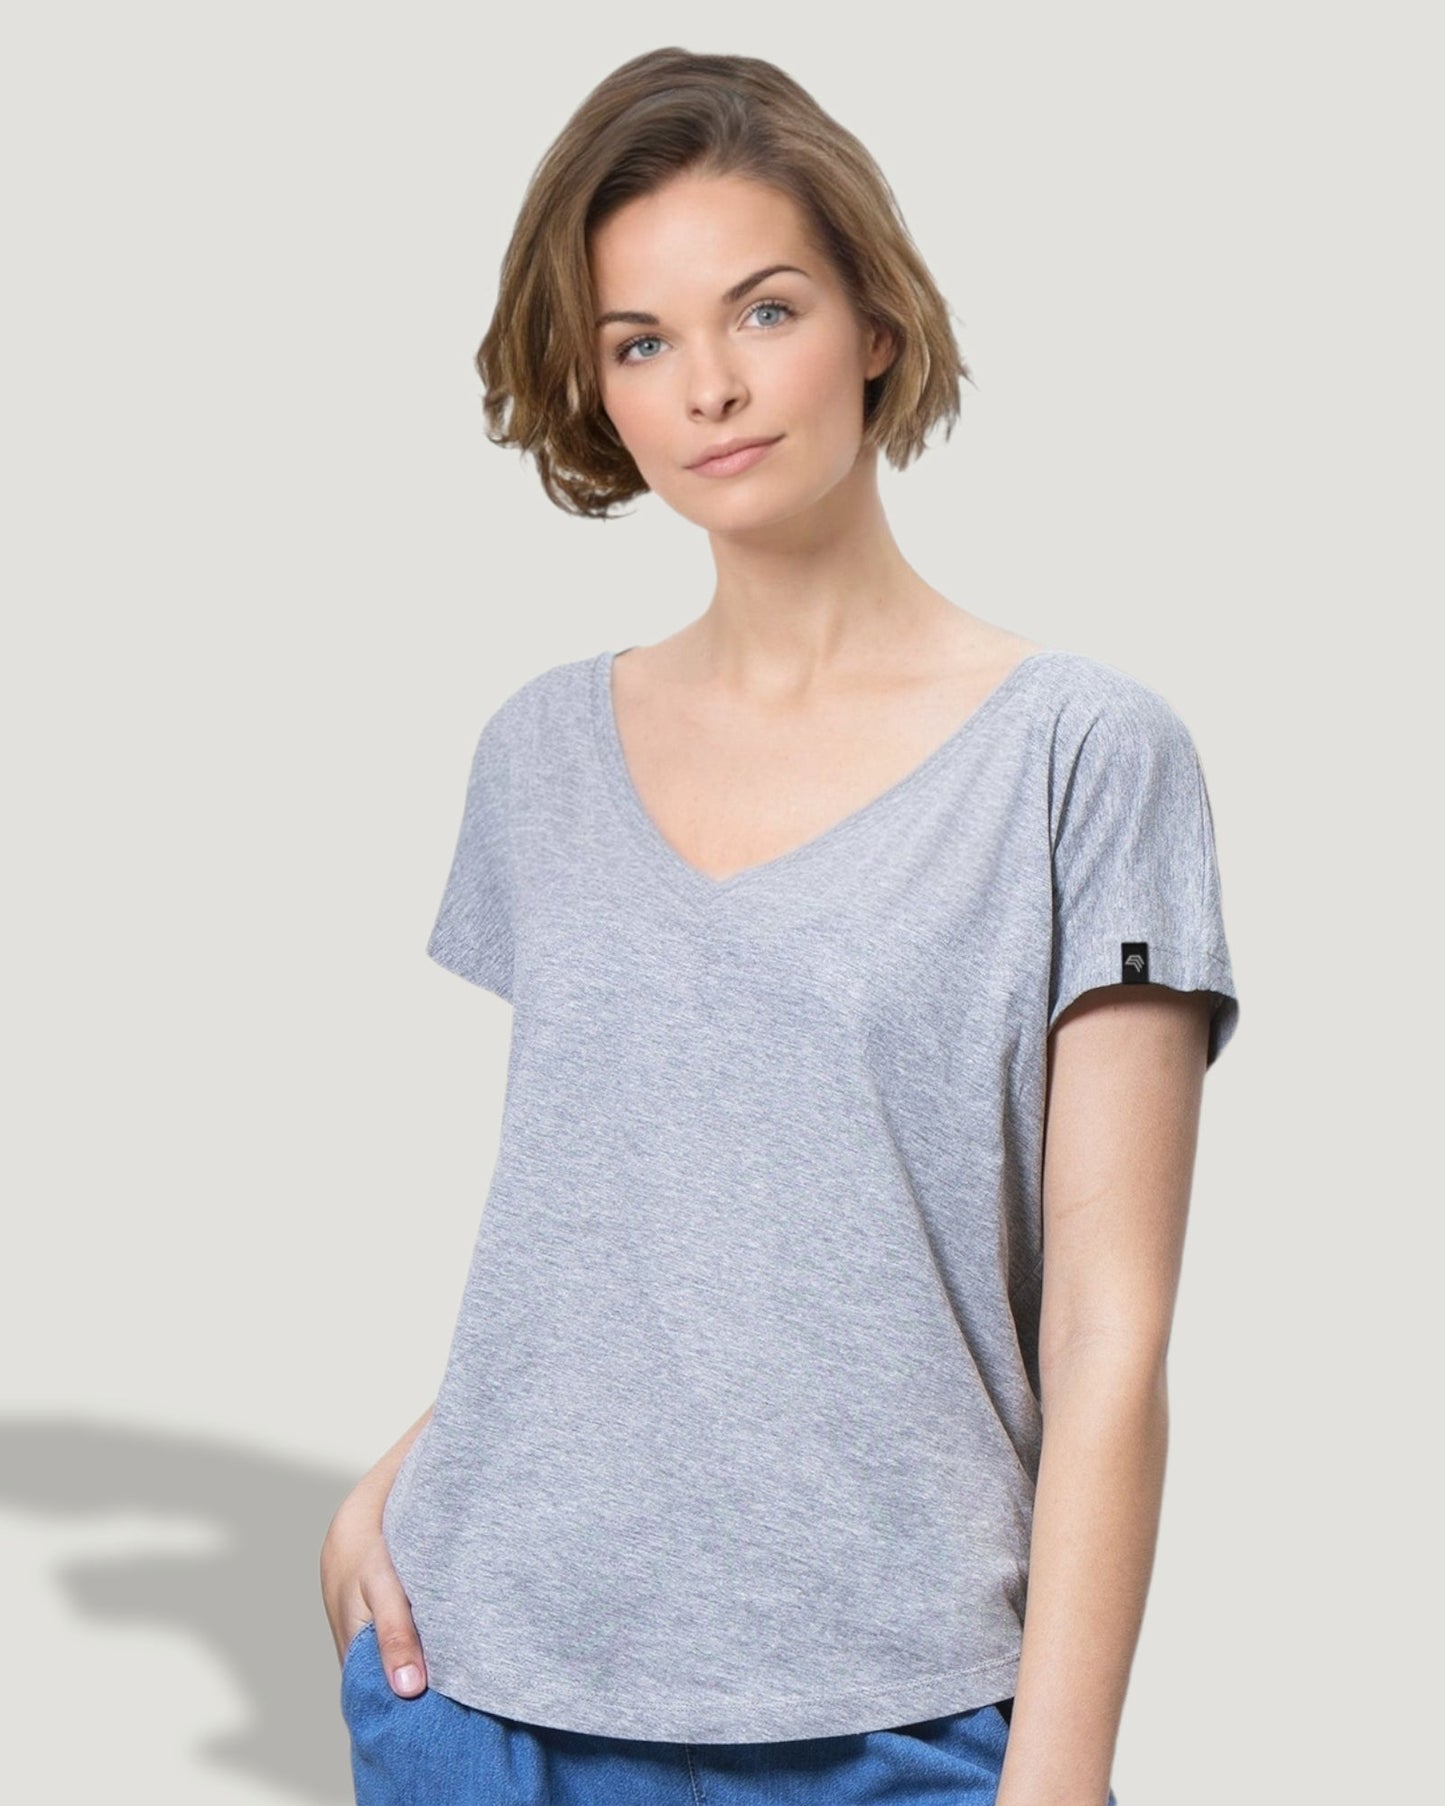 ― % ― MTS M147 ― Women's Bio-Baumwolle V-Neck T-Shirt - Heather Grau Melange [M]